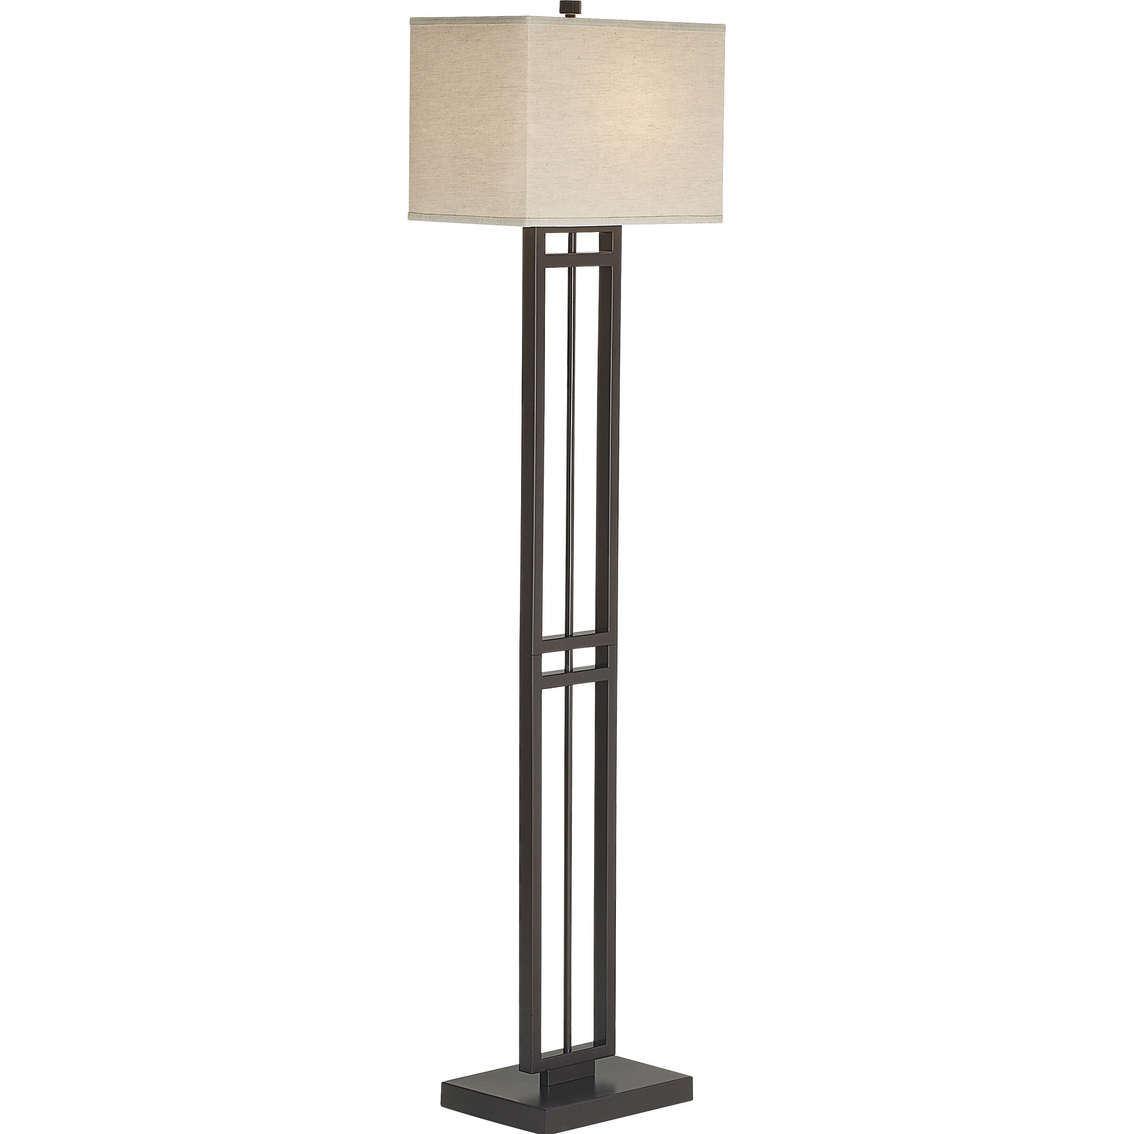 Pacific Coast Lighting Central Loft Floor Lamp Lamps regarding dimensions 1134 X 1134